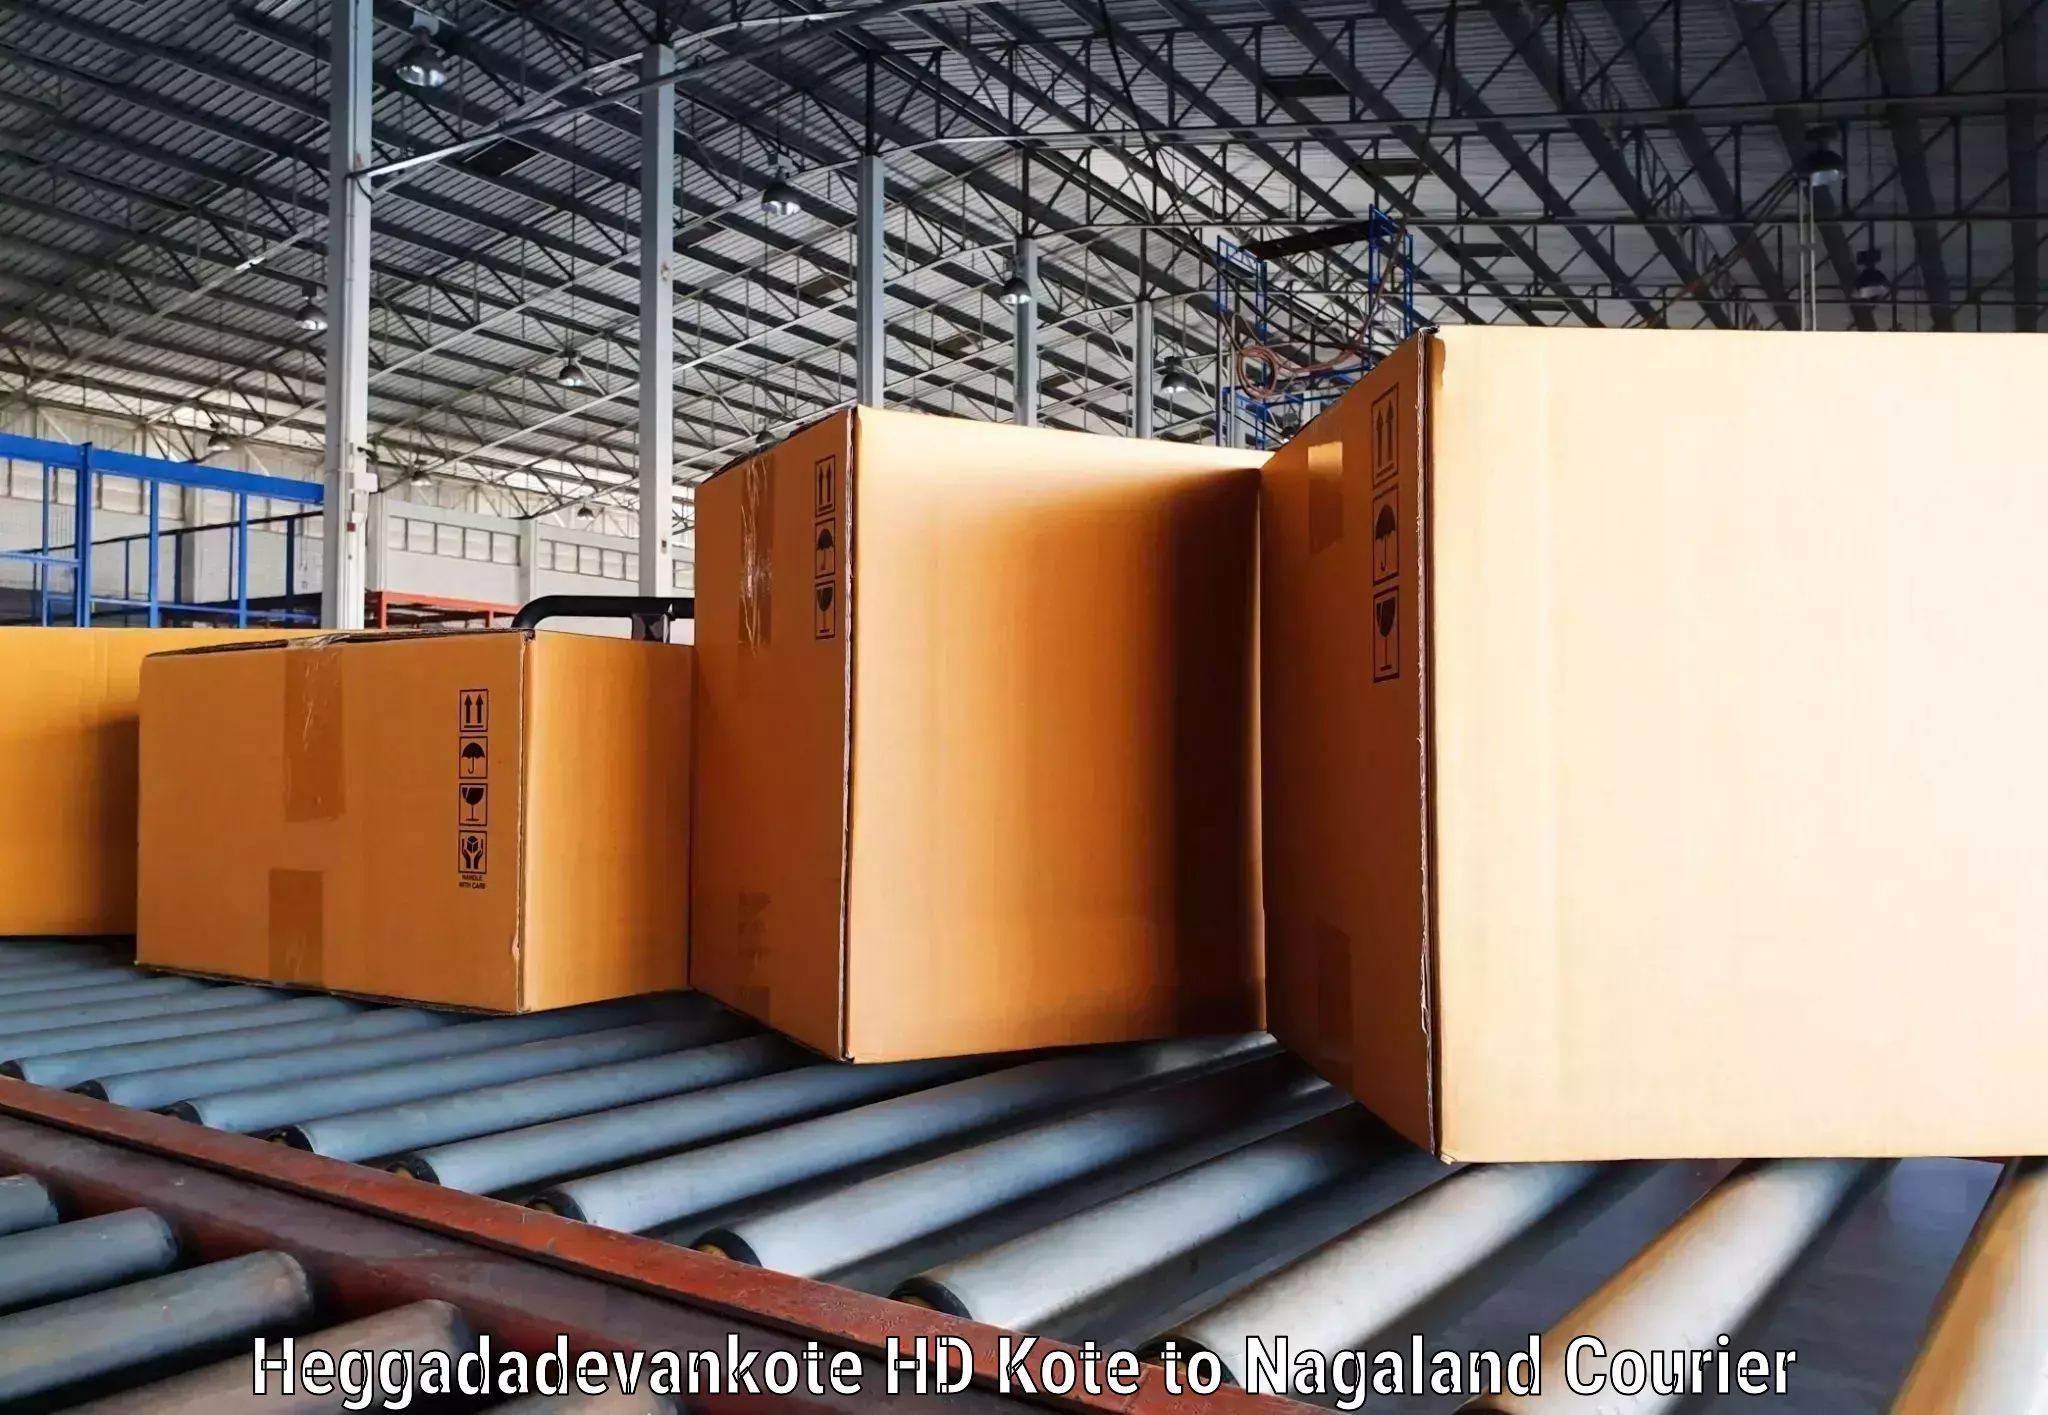 Logistics management Heggadadevankote HD Kote to Nagaland